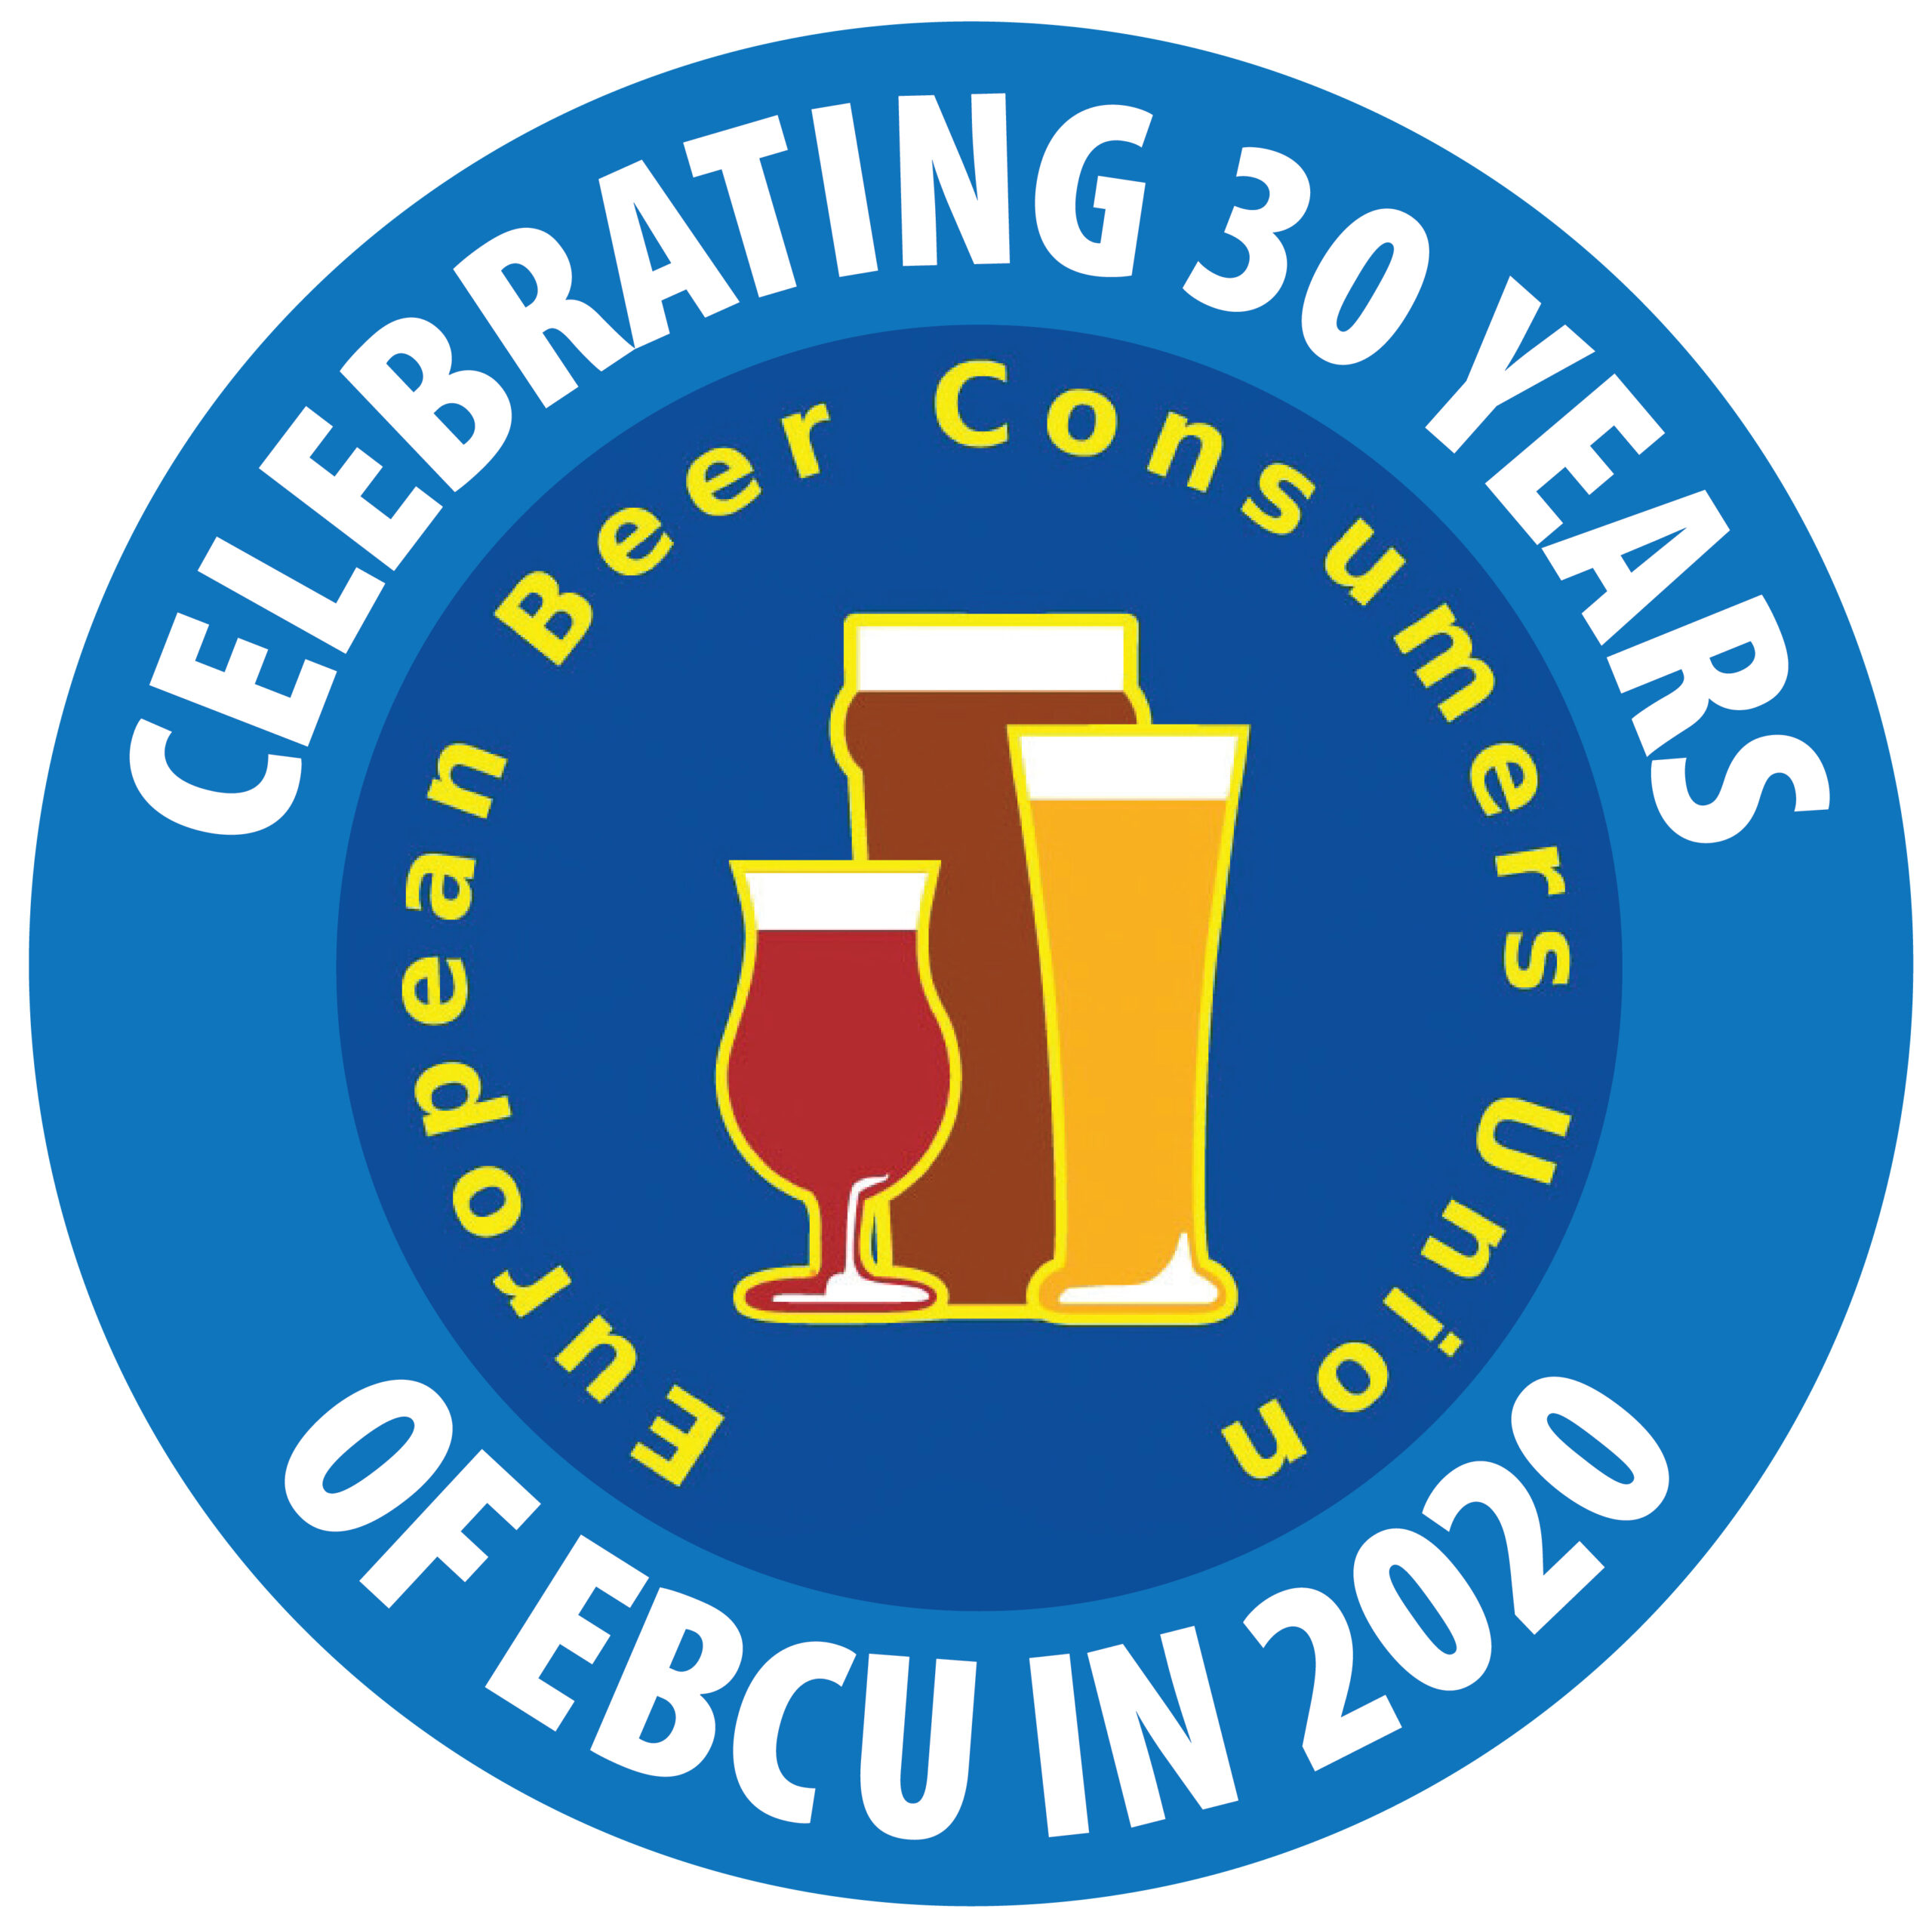 30 years of EBCU!